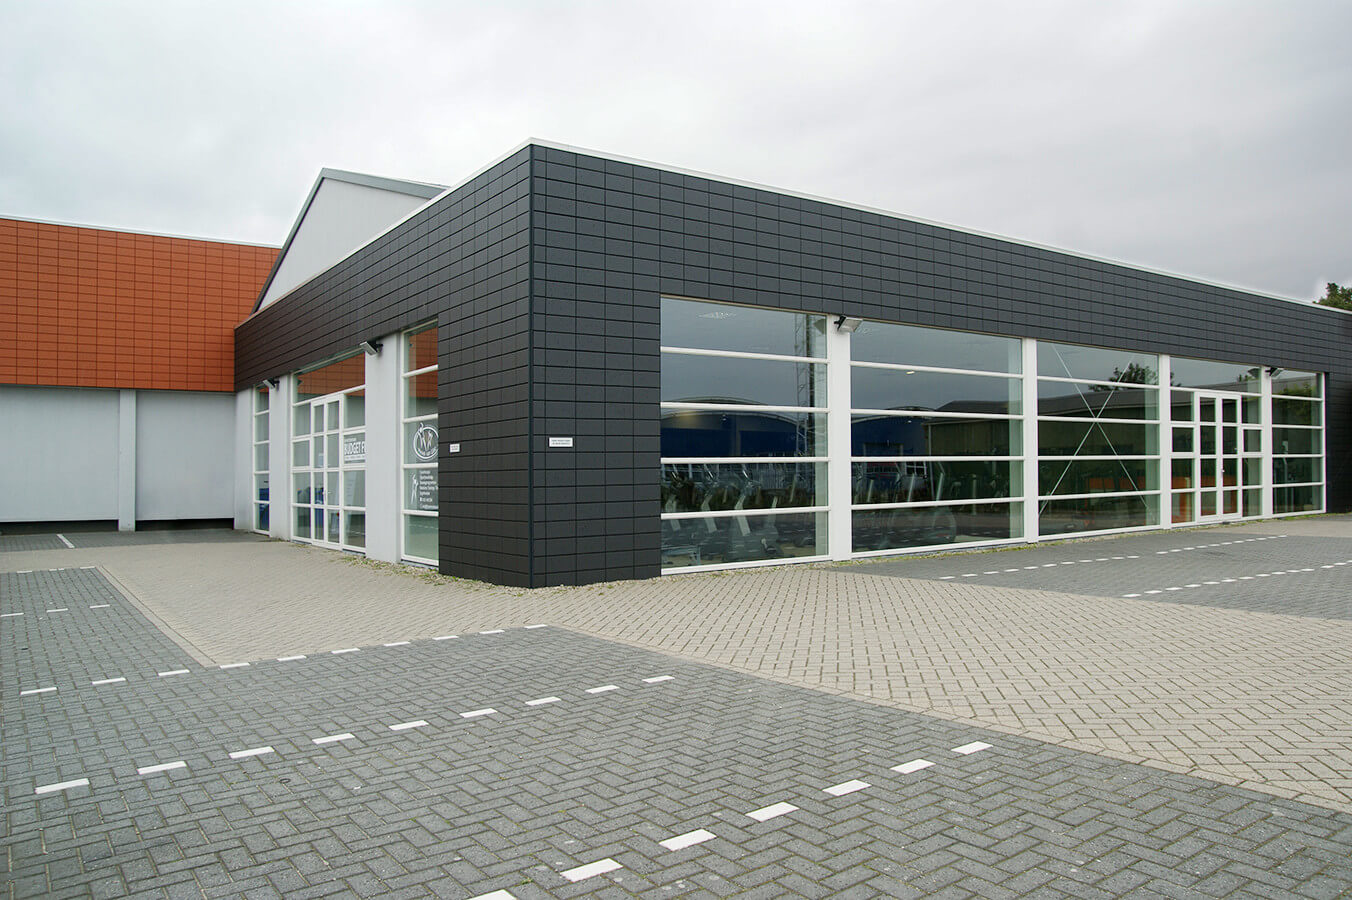 Sportcentrum Bfit in Middelharnis